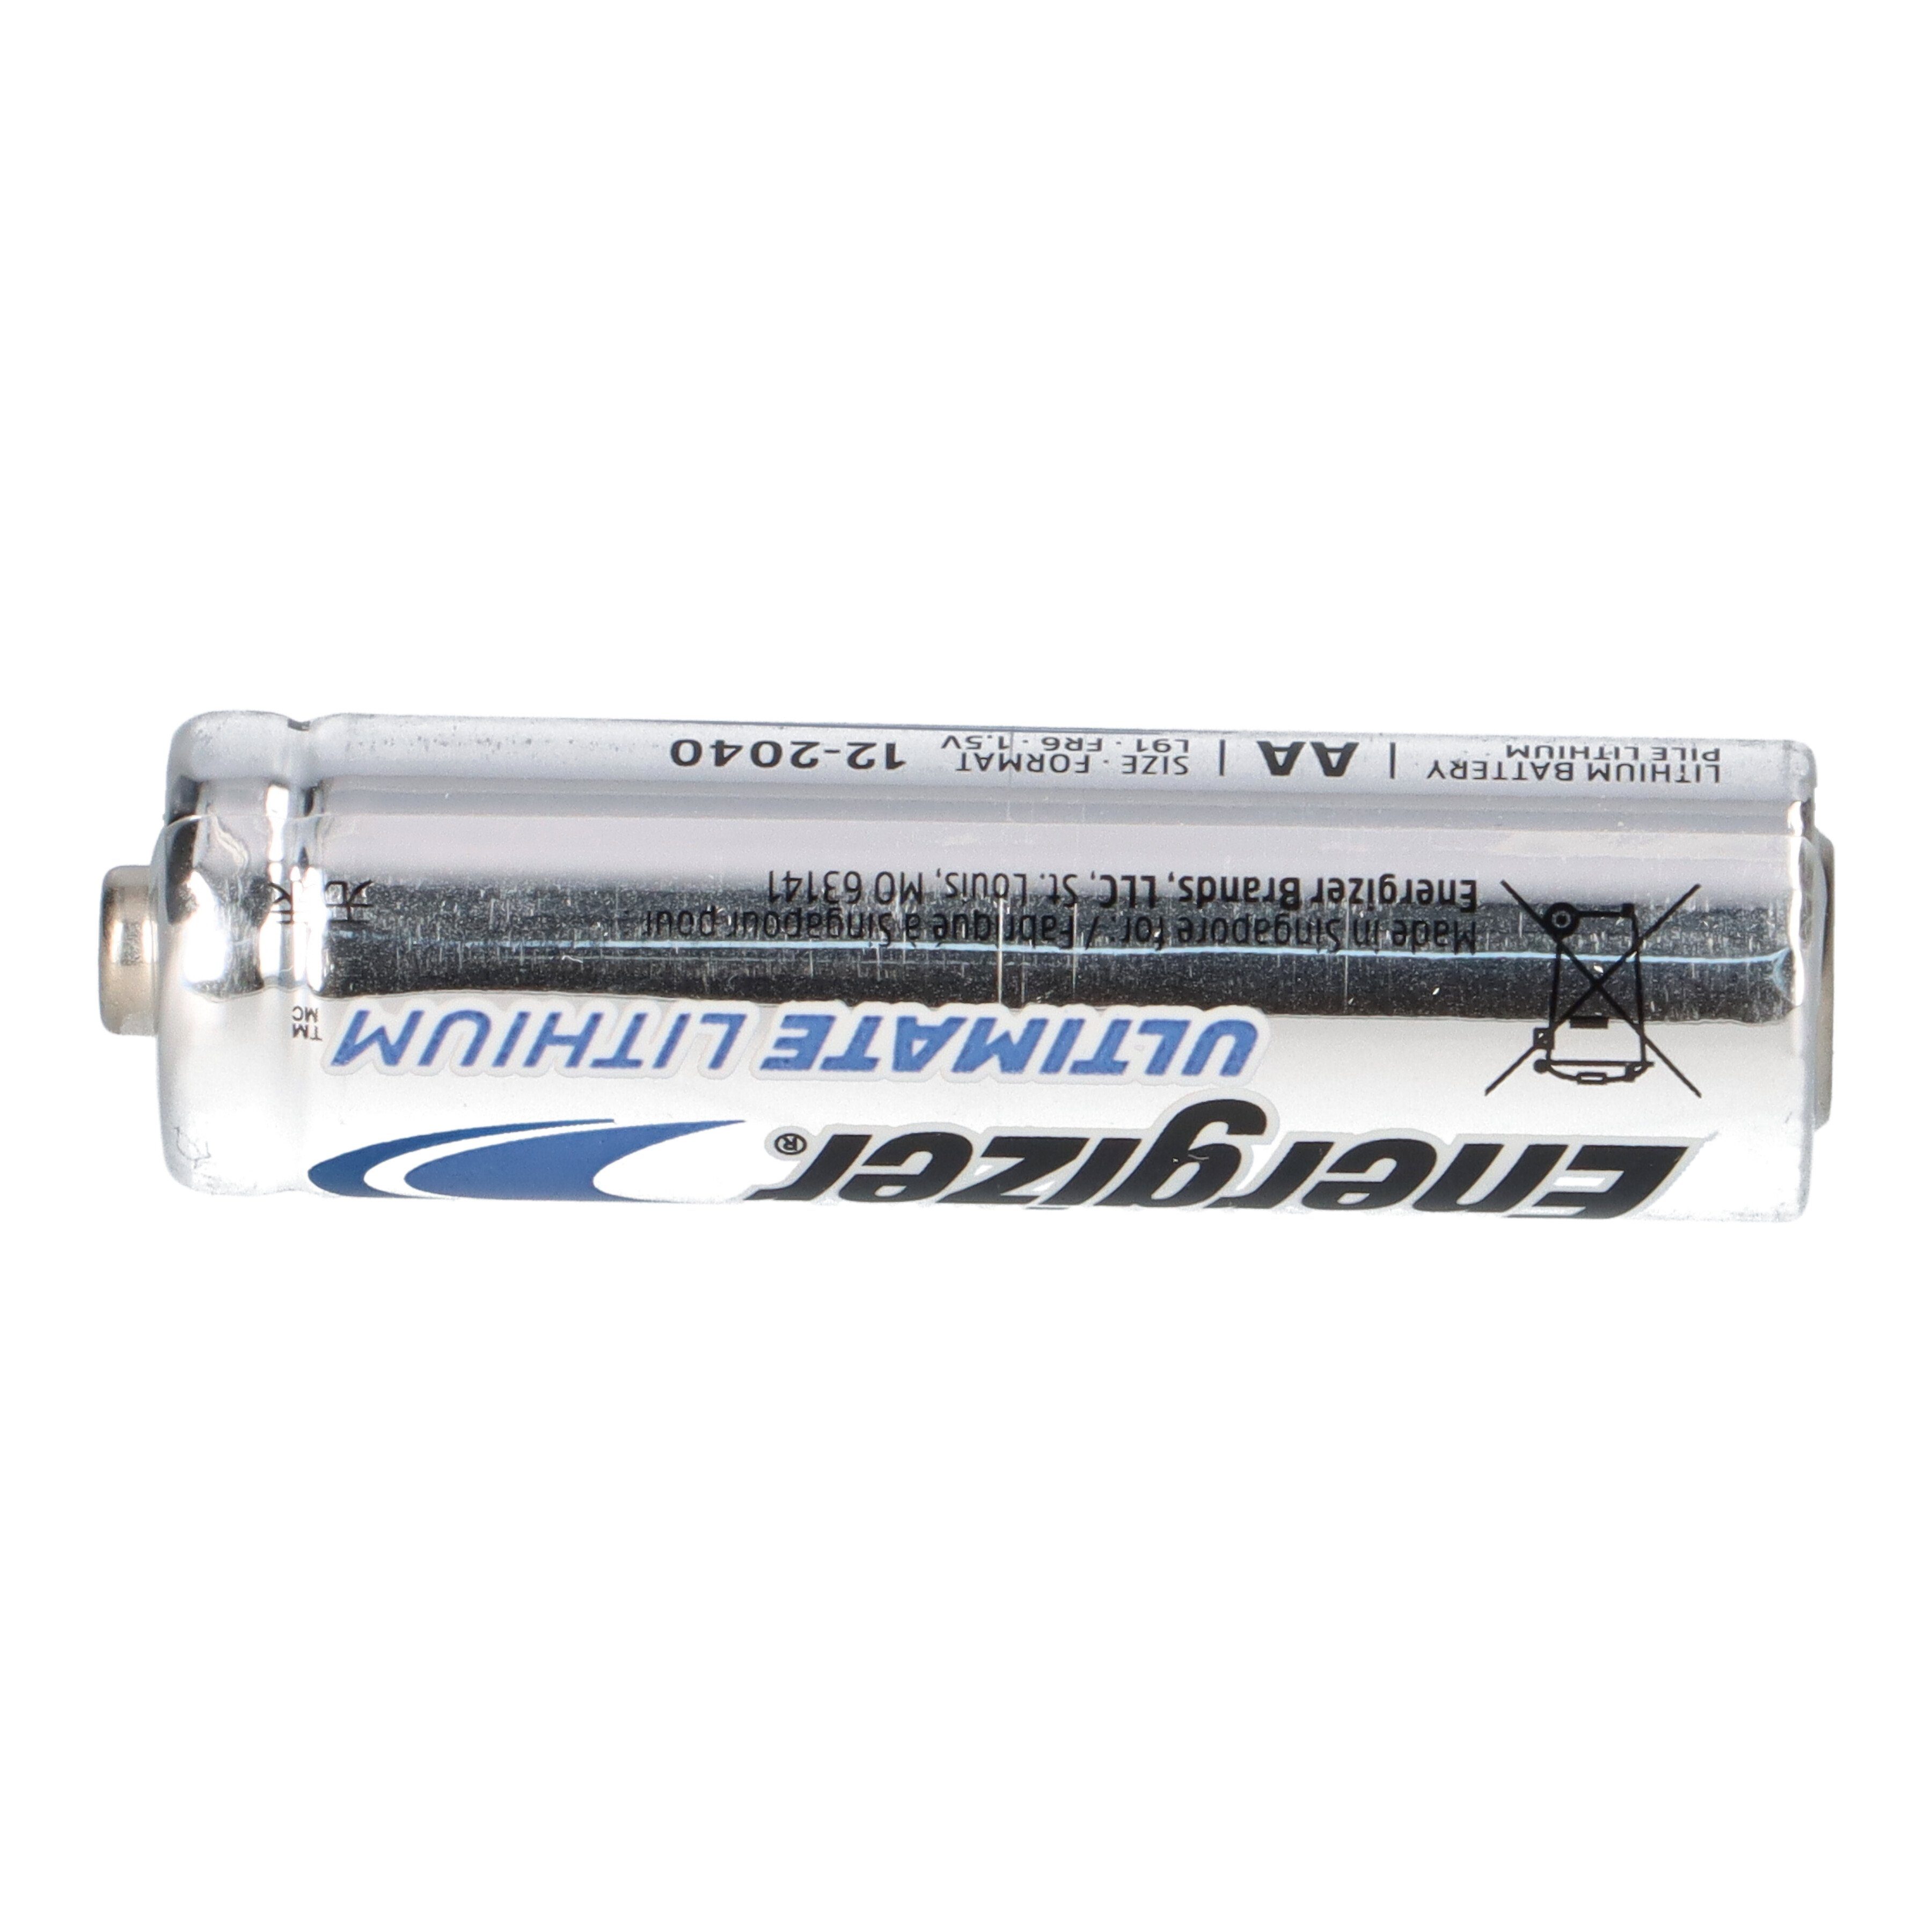 Batterie LR06 Batterie Energizer AA Ultimate Lithium Energizer 10x 1.5V